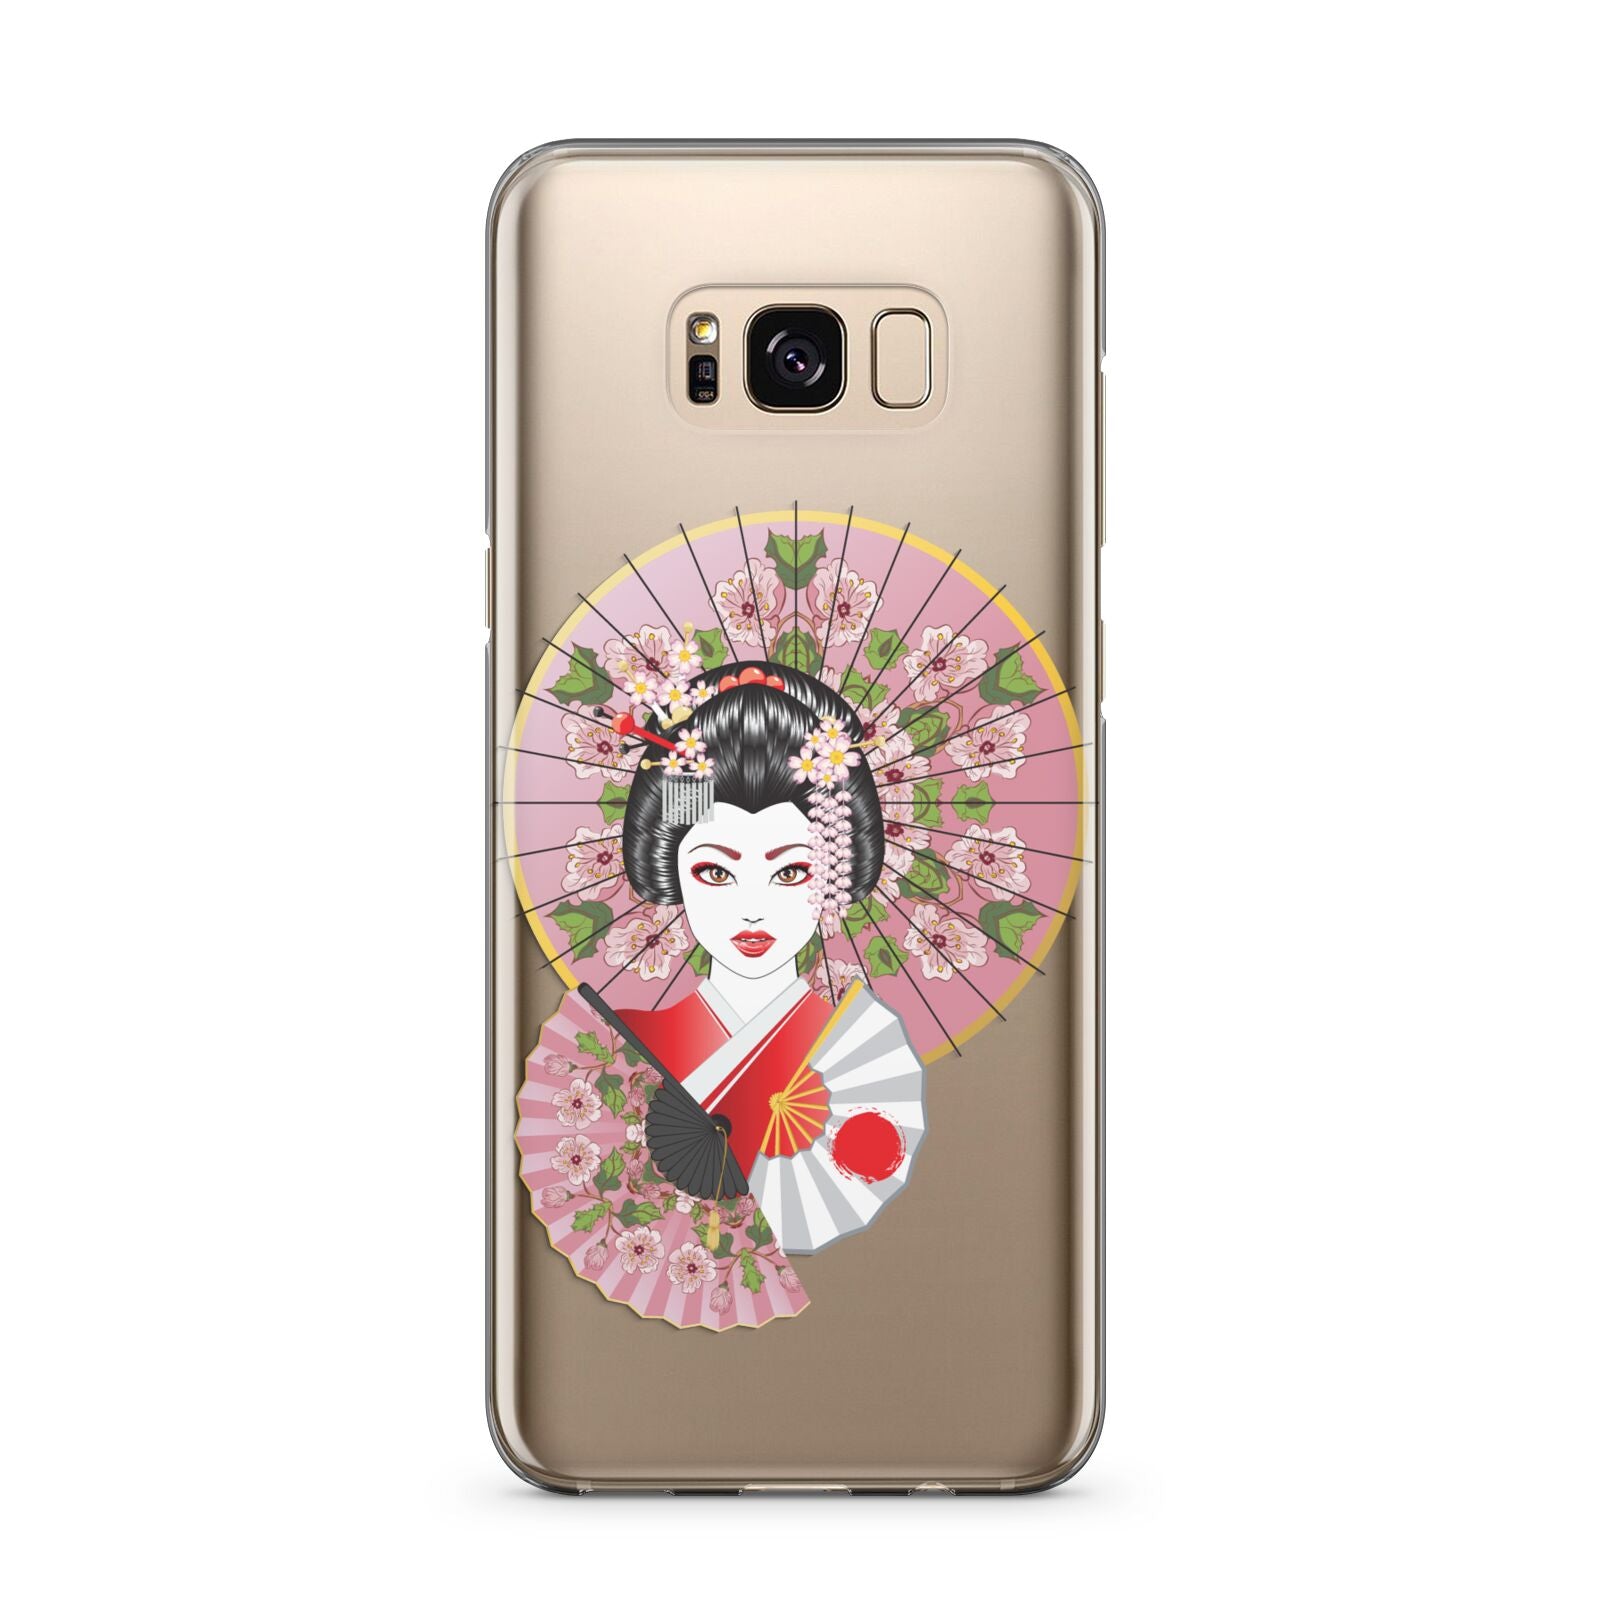 Geisha Girl Samsung Galaxy S8 Plus Case